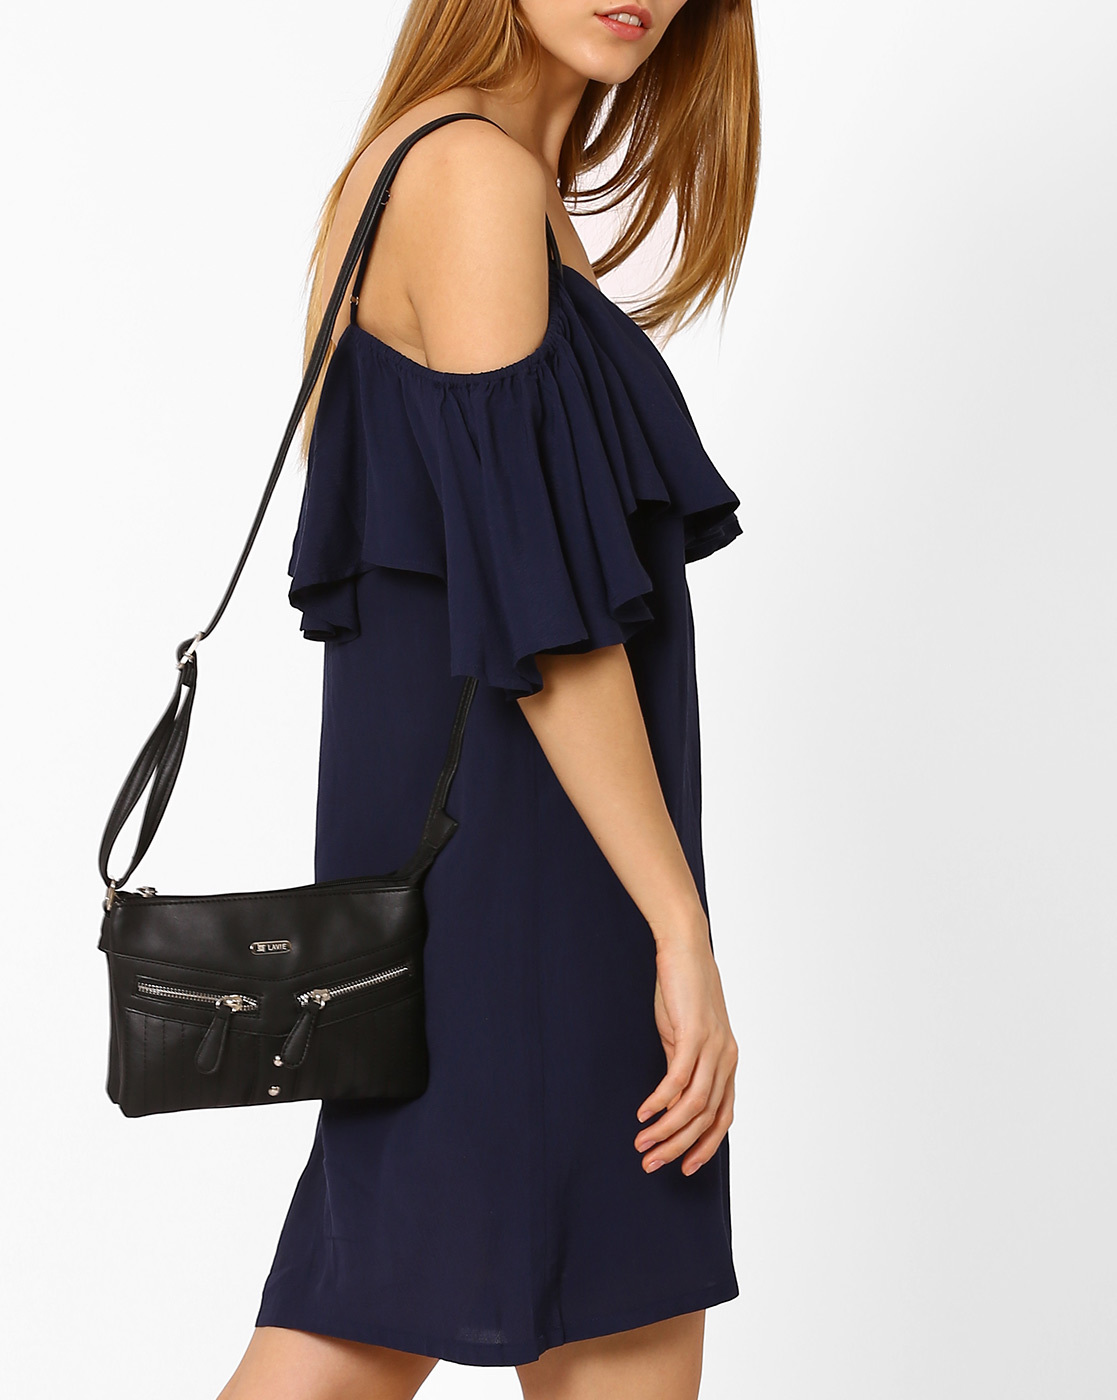 Lavie Rosetta 1 Women's Sling Bag (Khaki) : : Fashion